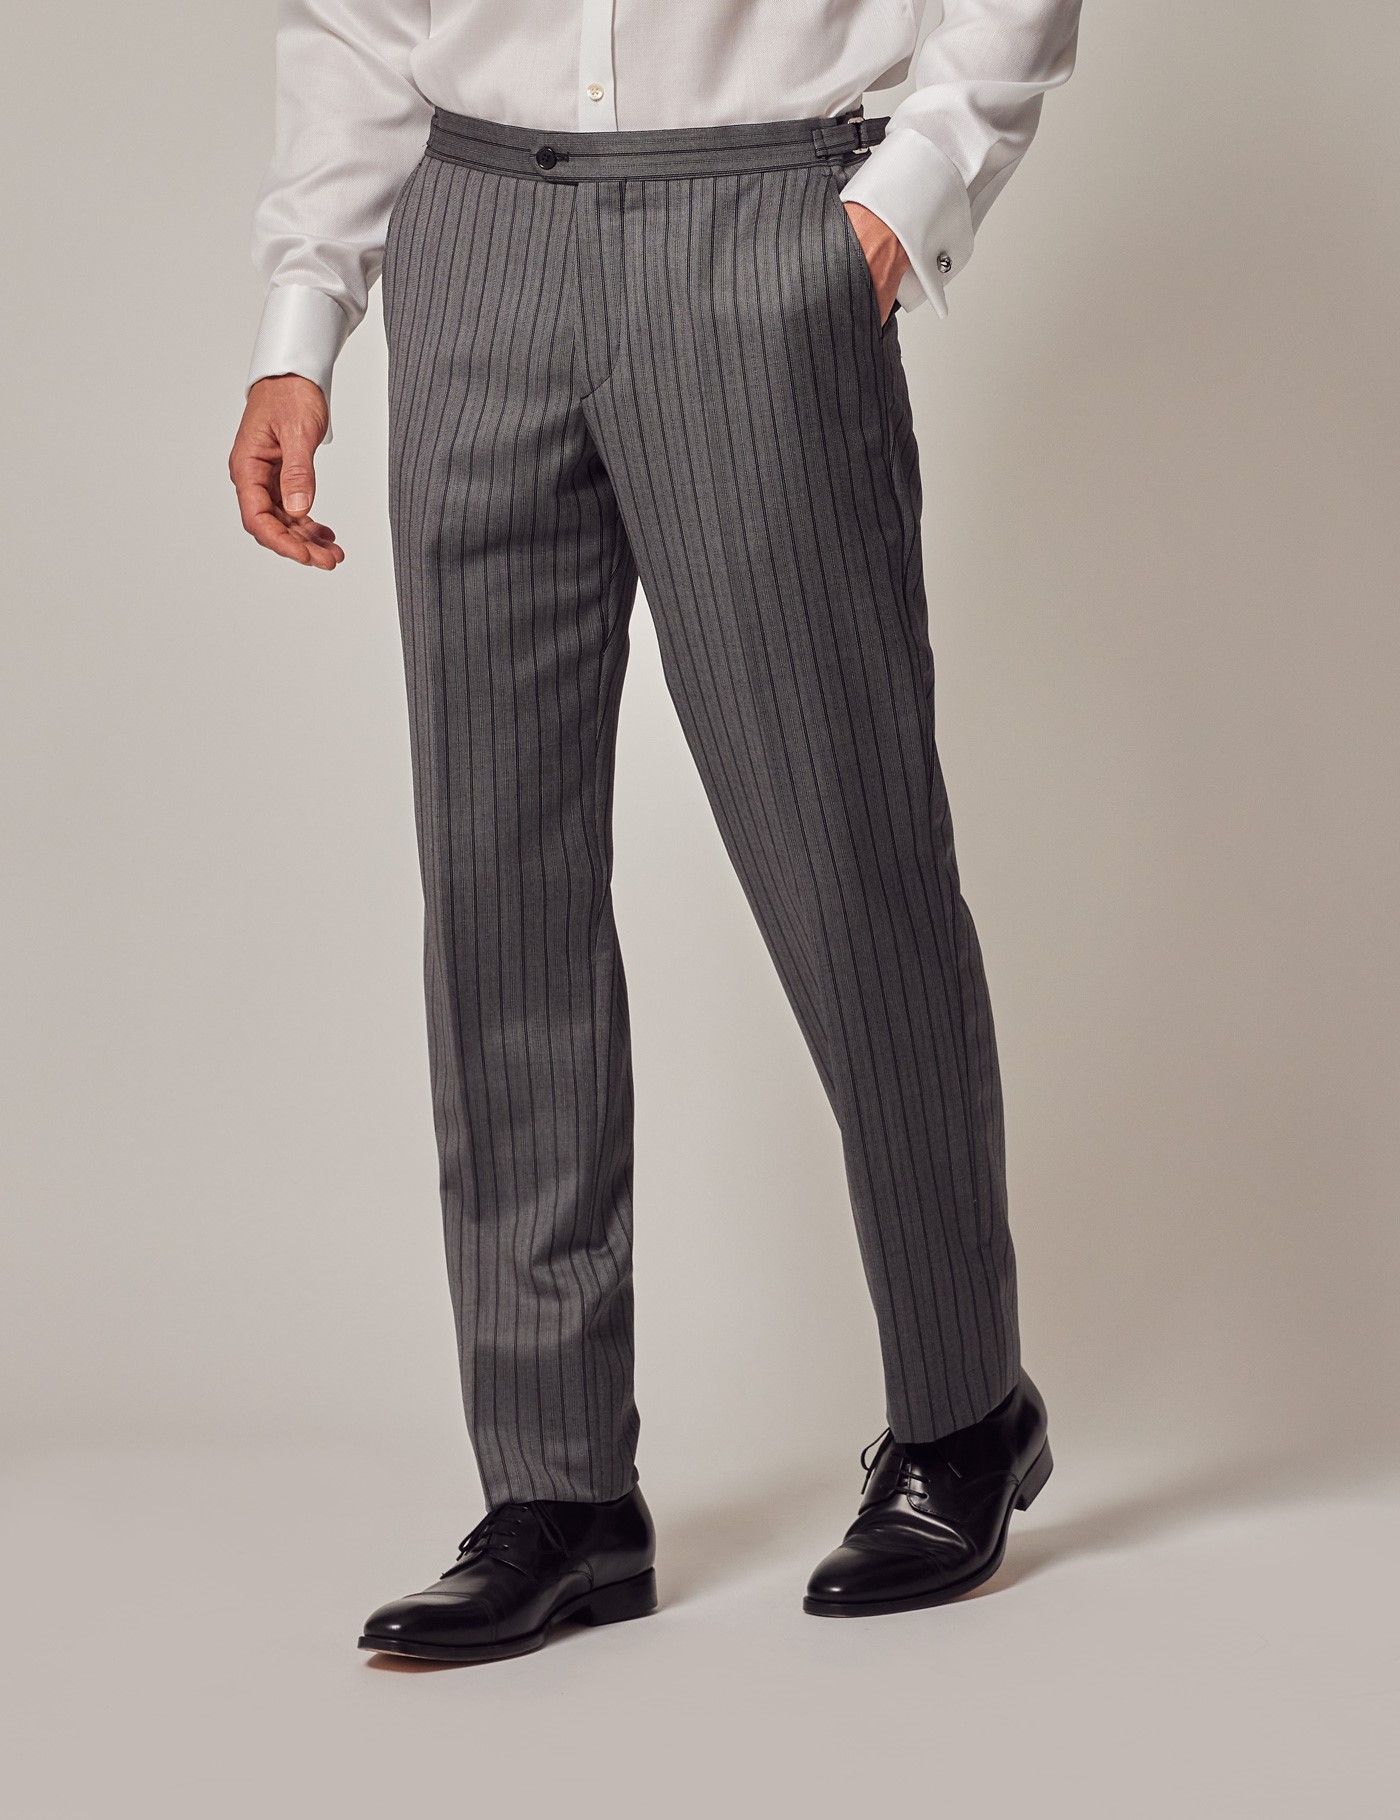 Dressy men's velvet pants in soft beige with pinsriped pattern